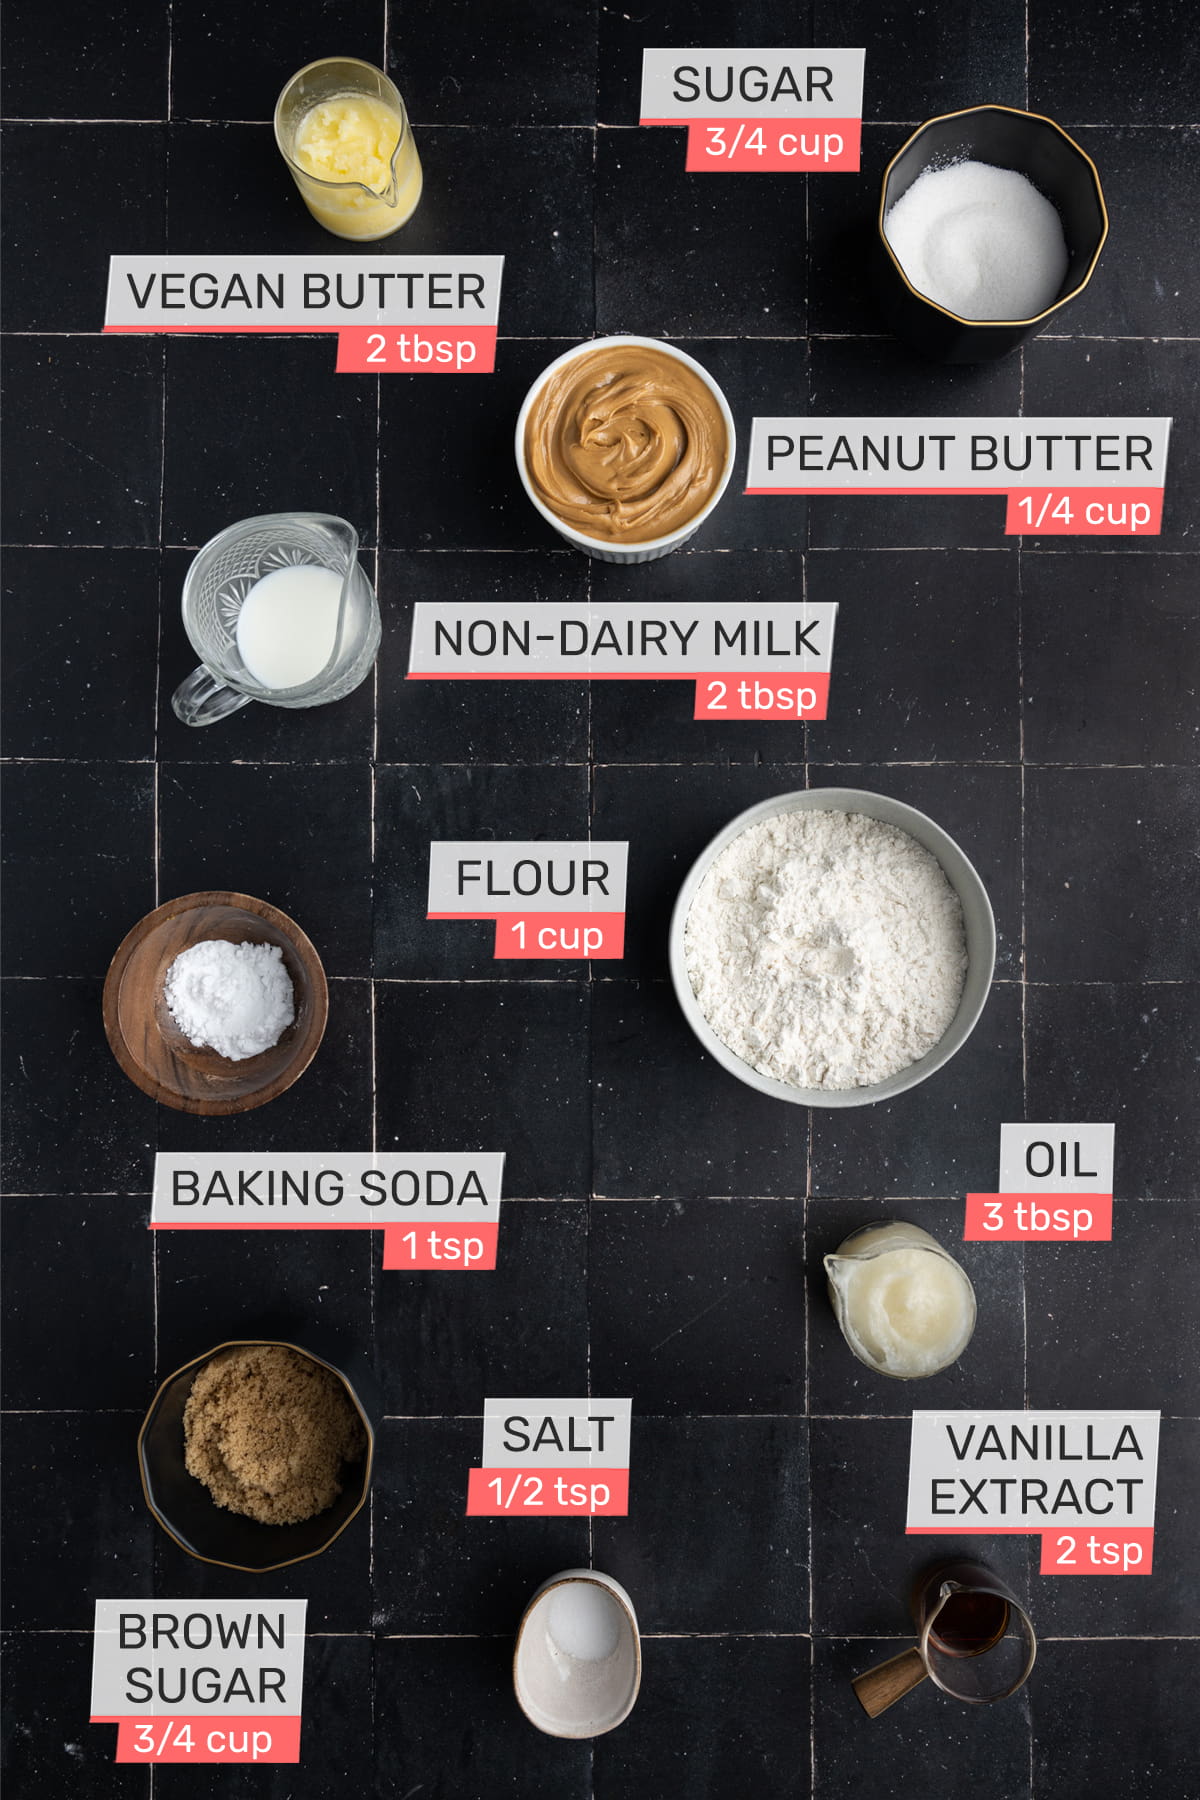 Overhead view of all ingredients for Vegan Peanut Butter Biscuits - sugar, vegan butter, peanut butter, non-dairy milk, flour, baking soda, oil, salt, vanilla extract, brown sugar